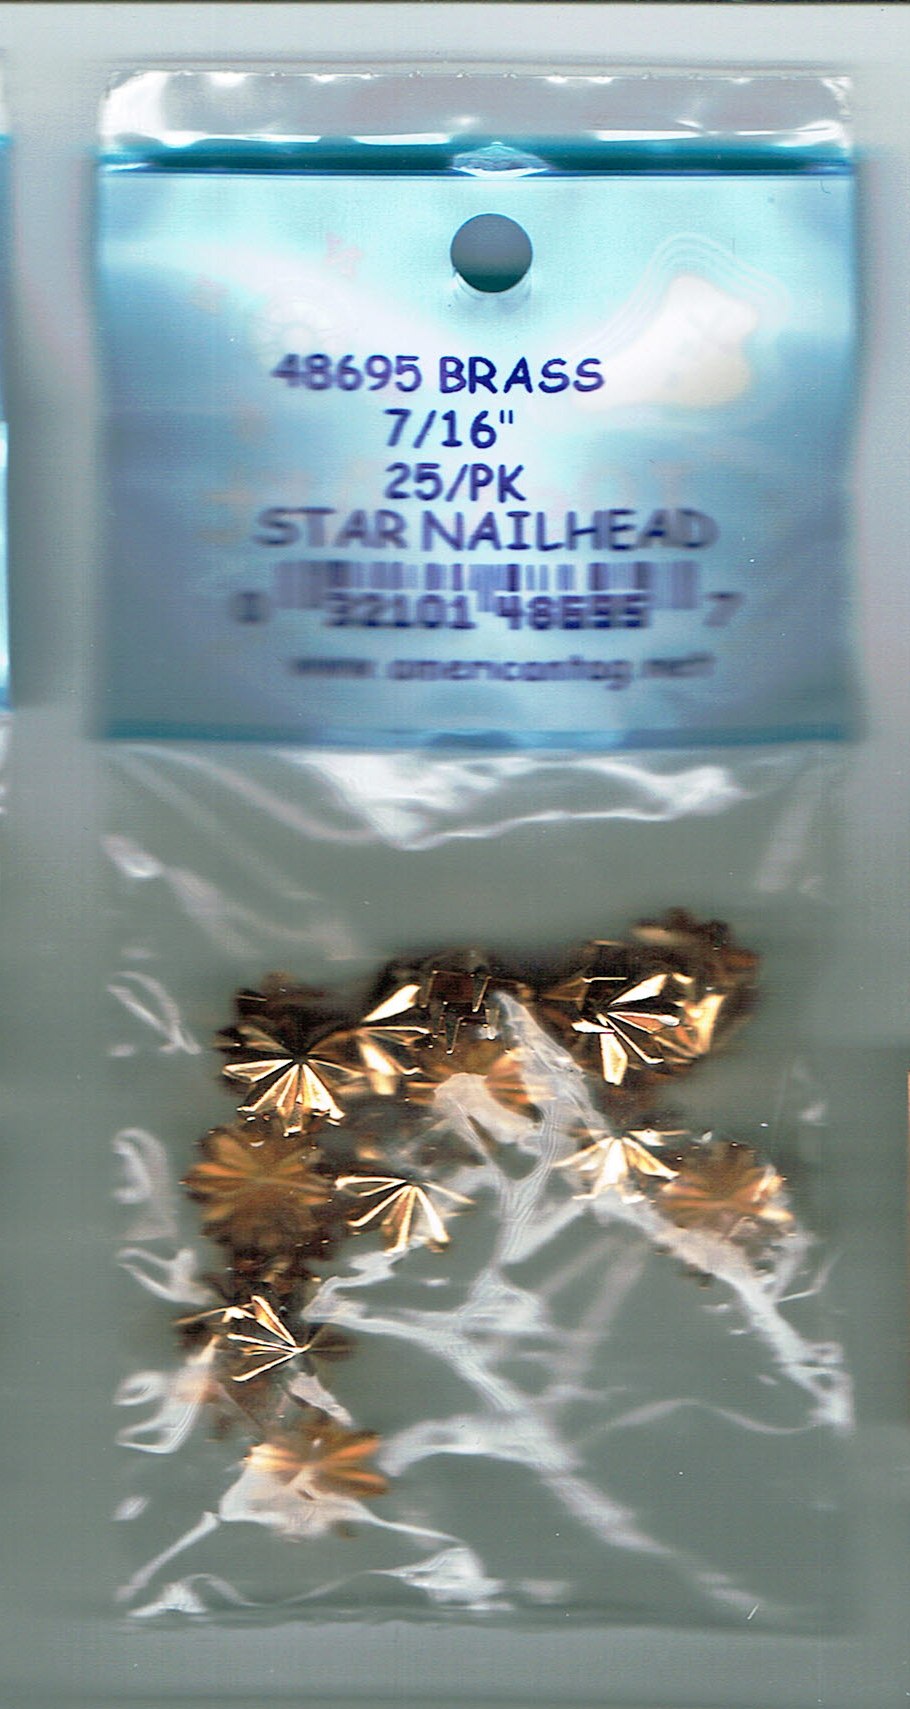 American Tag Nailheads - Brass 7/16" Stars (25/Pkg)